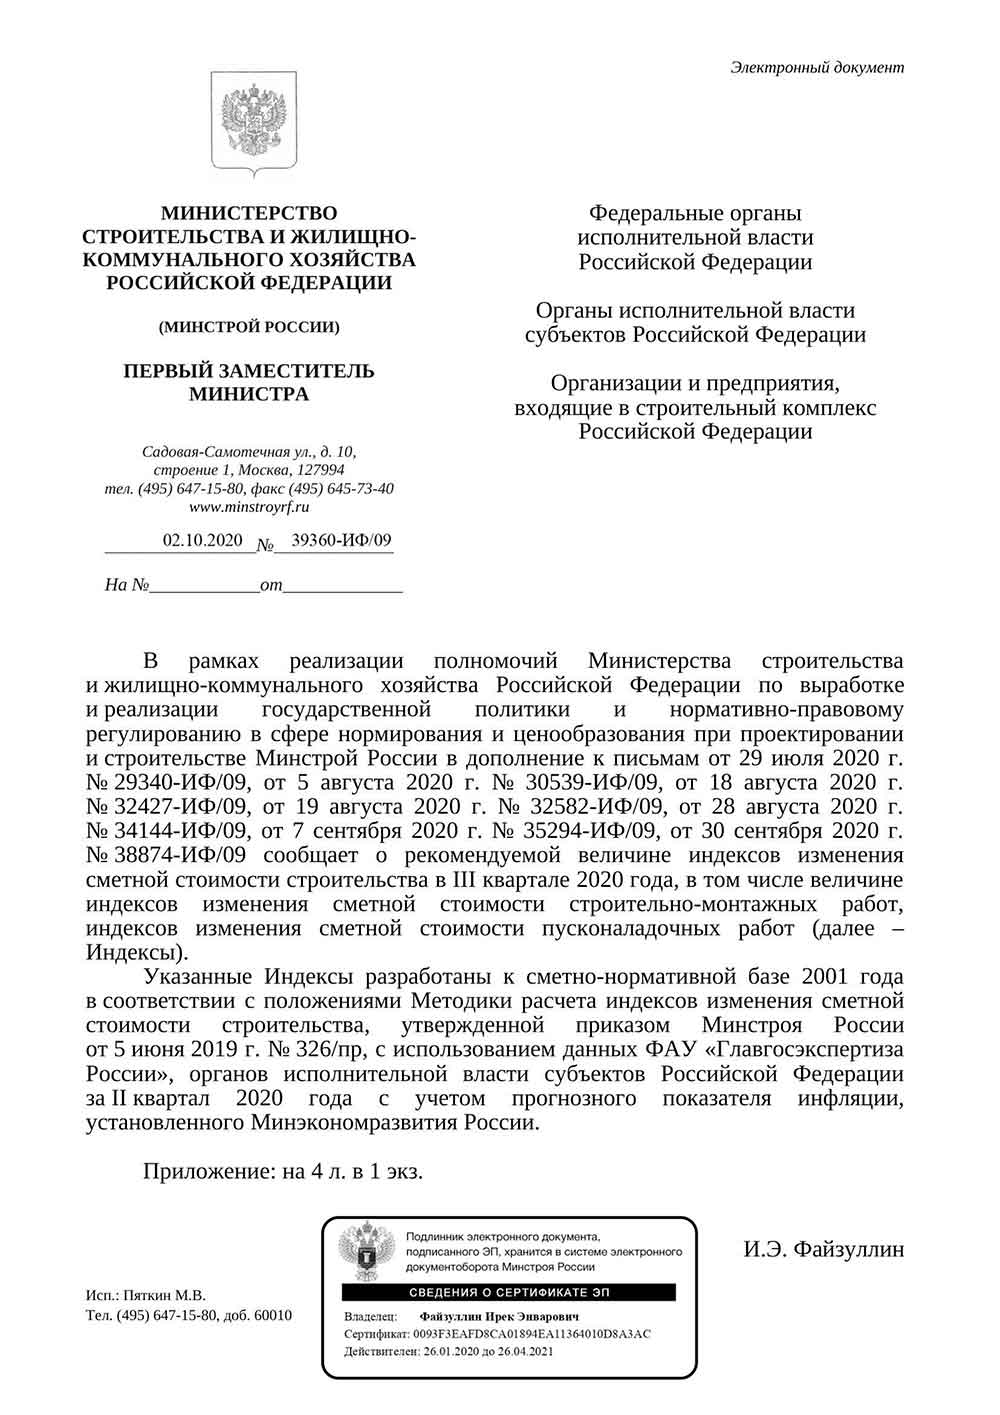 Письмо Минстроя РФ №39360-ИФ/09 от 02.10.2020 г.